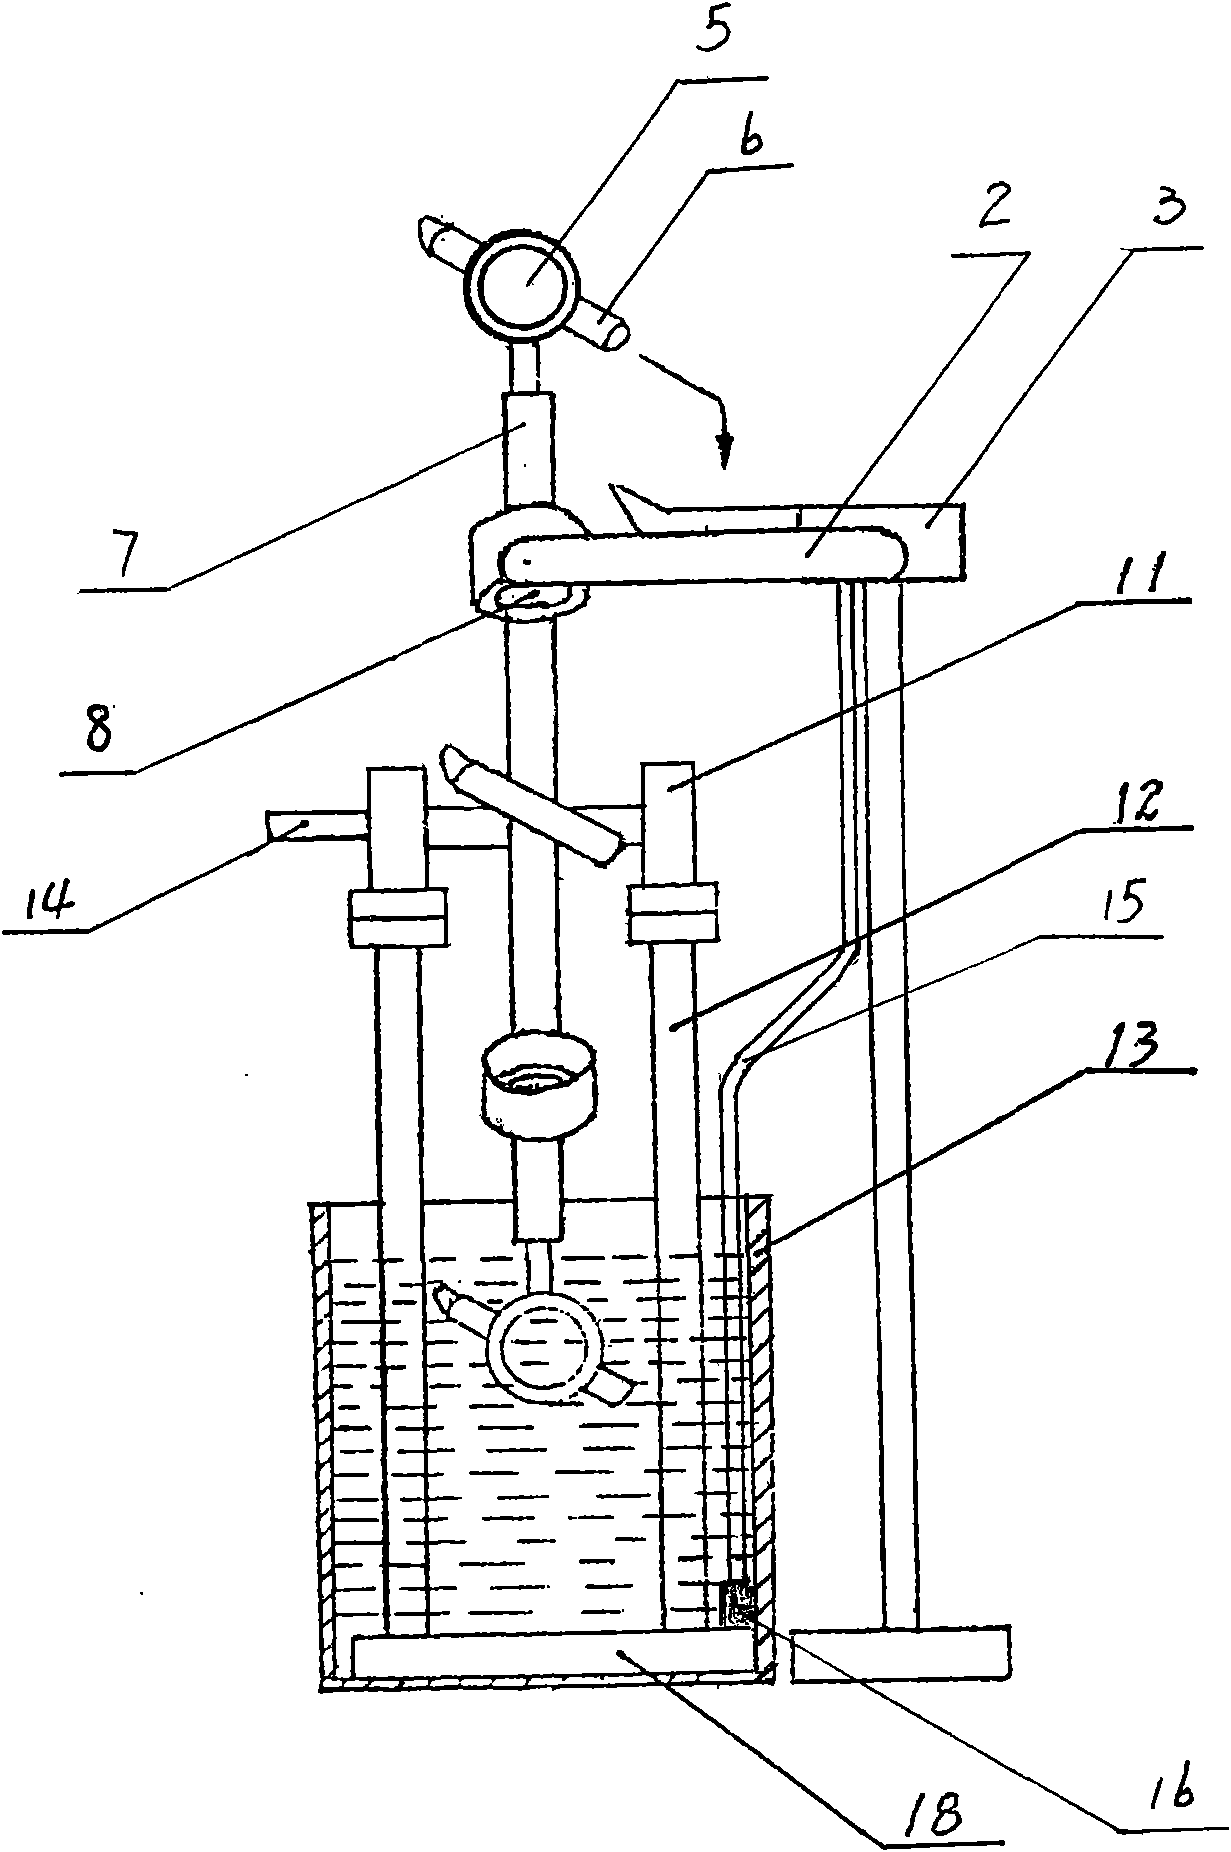 Static water circulation power waterwheel